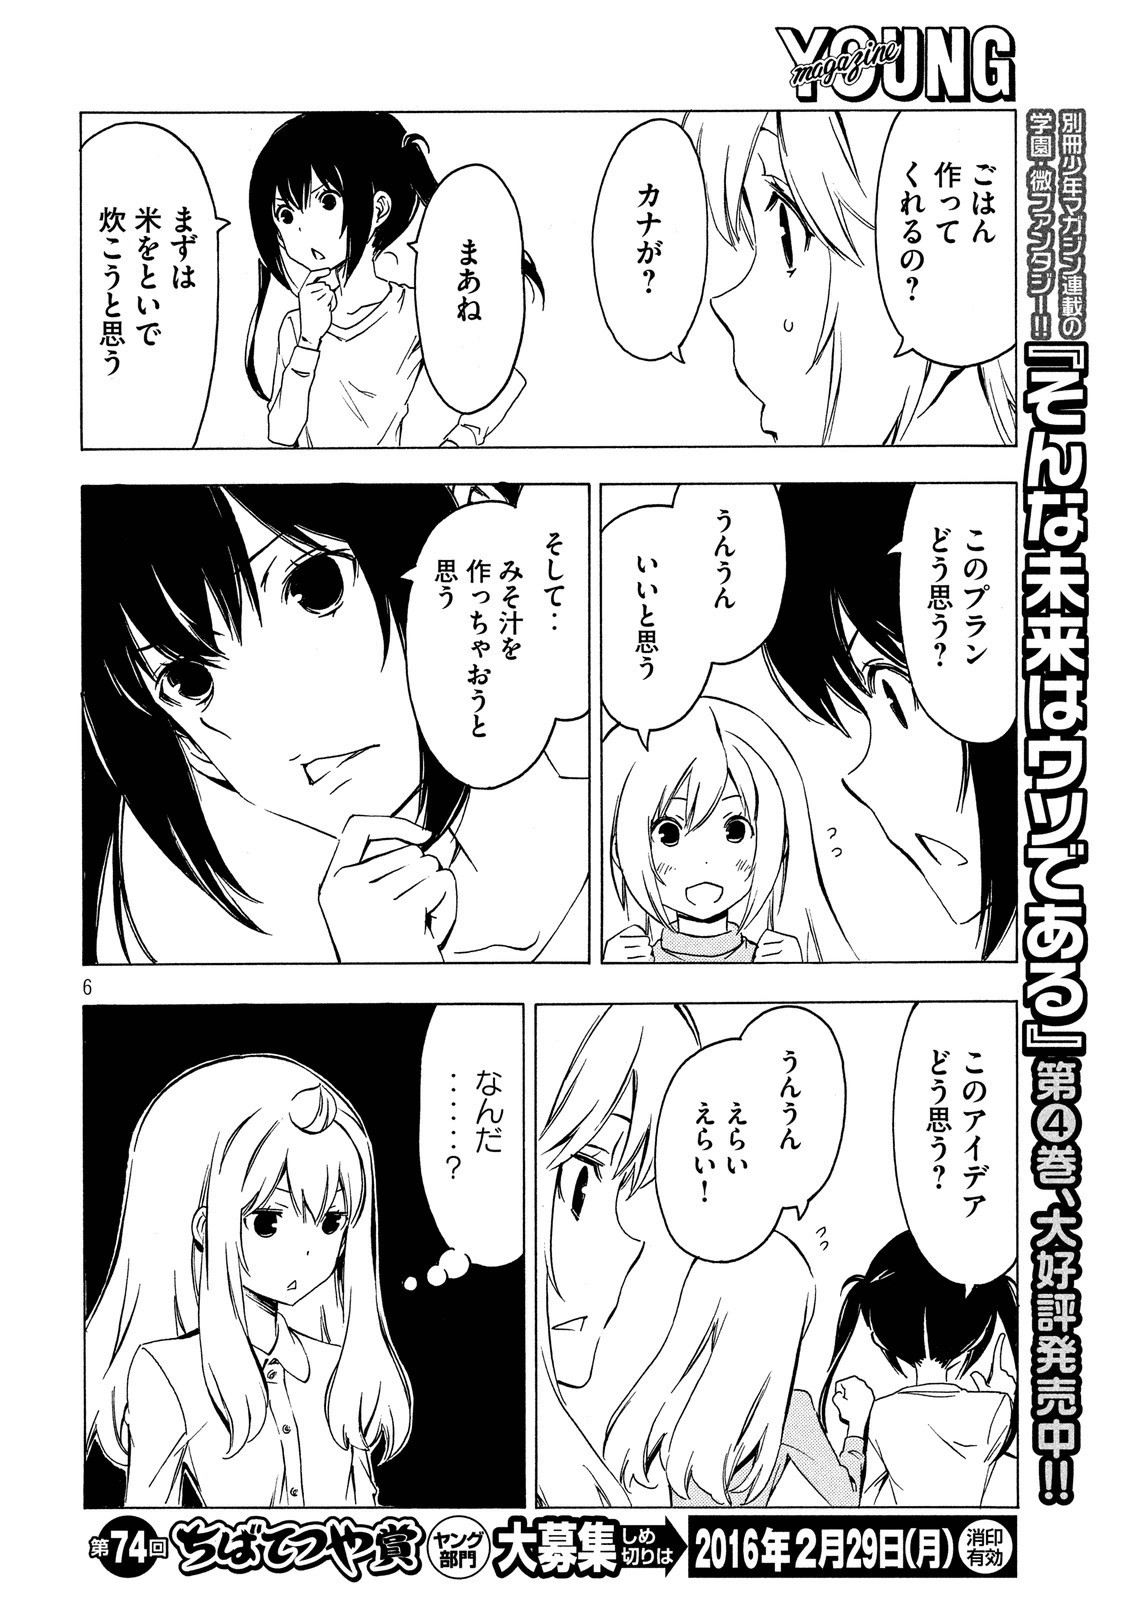 Minami-ke - Chapter 281 - Page 6